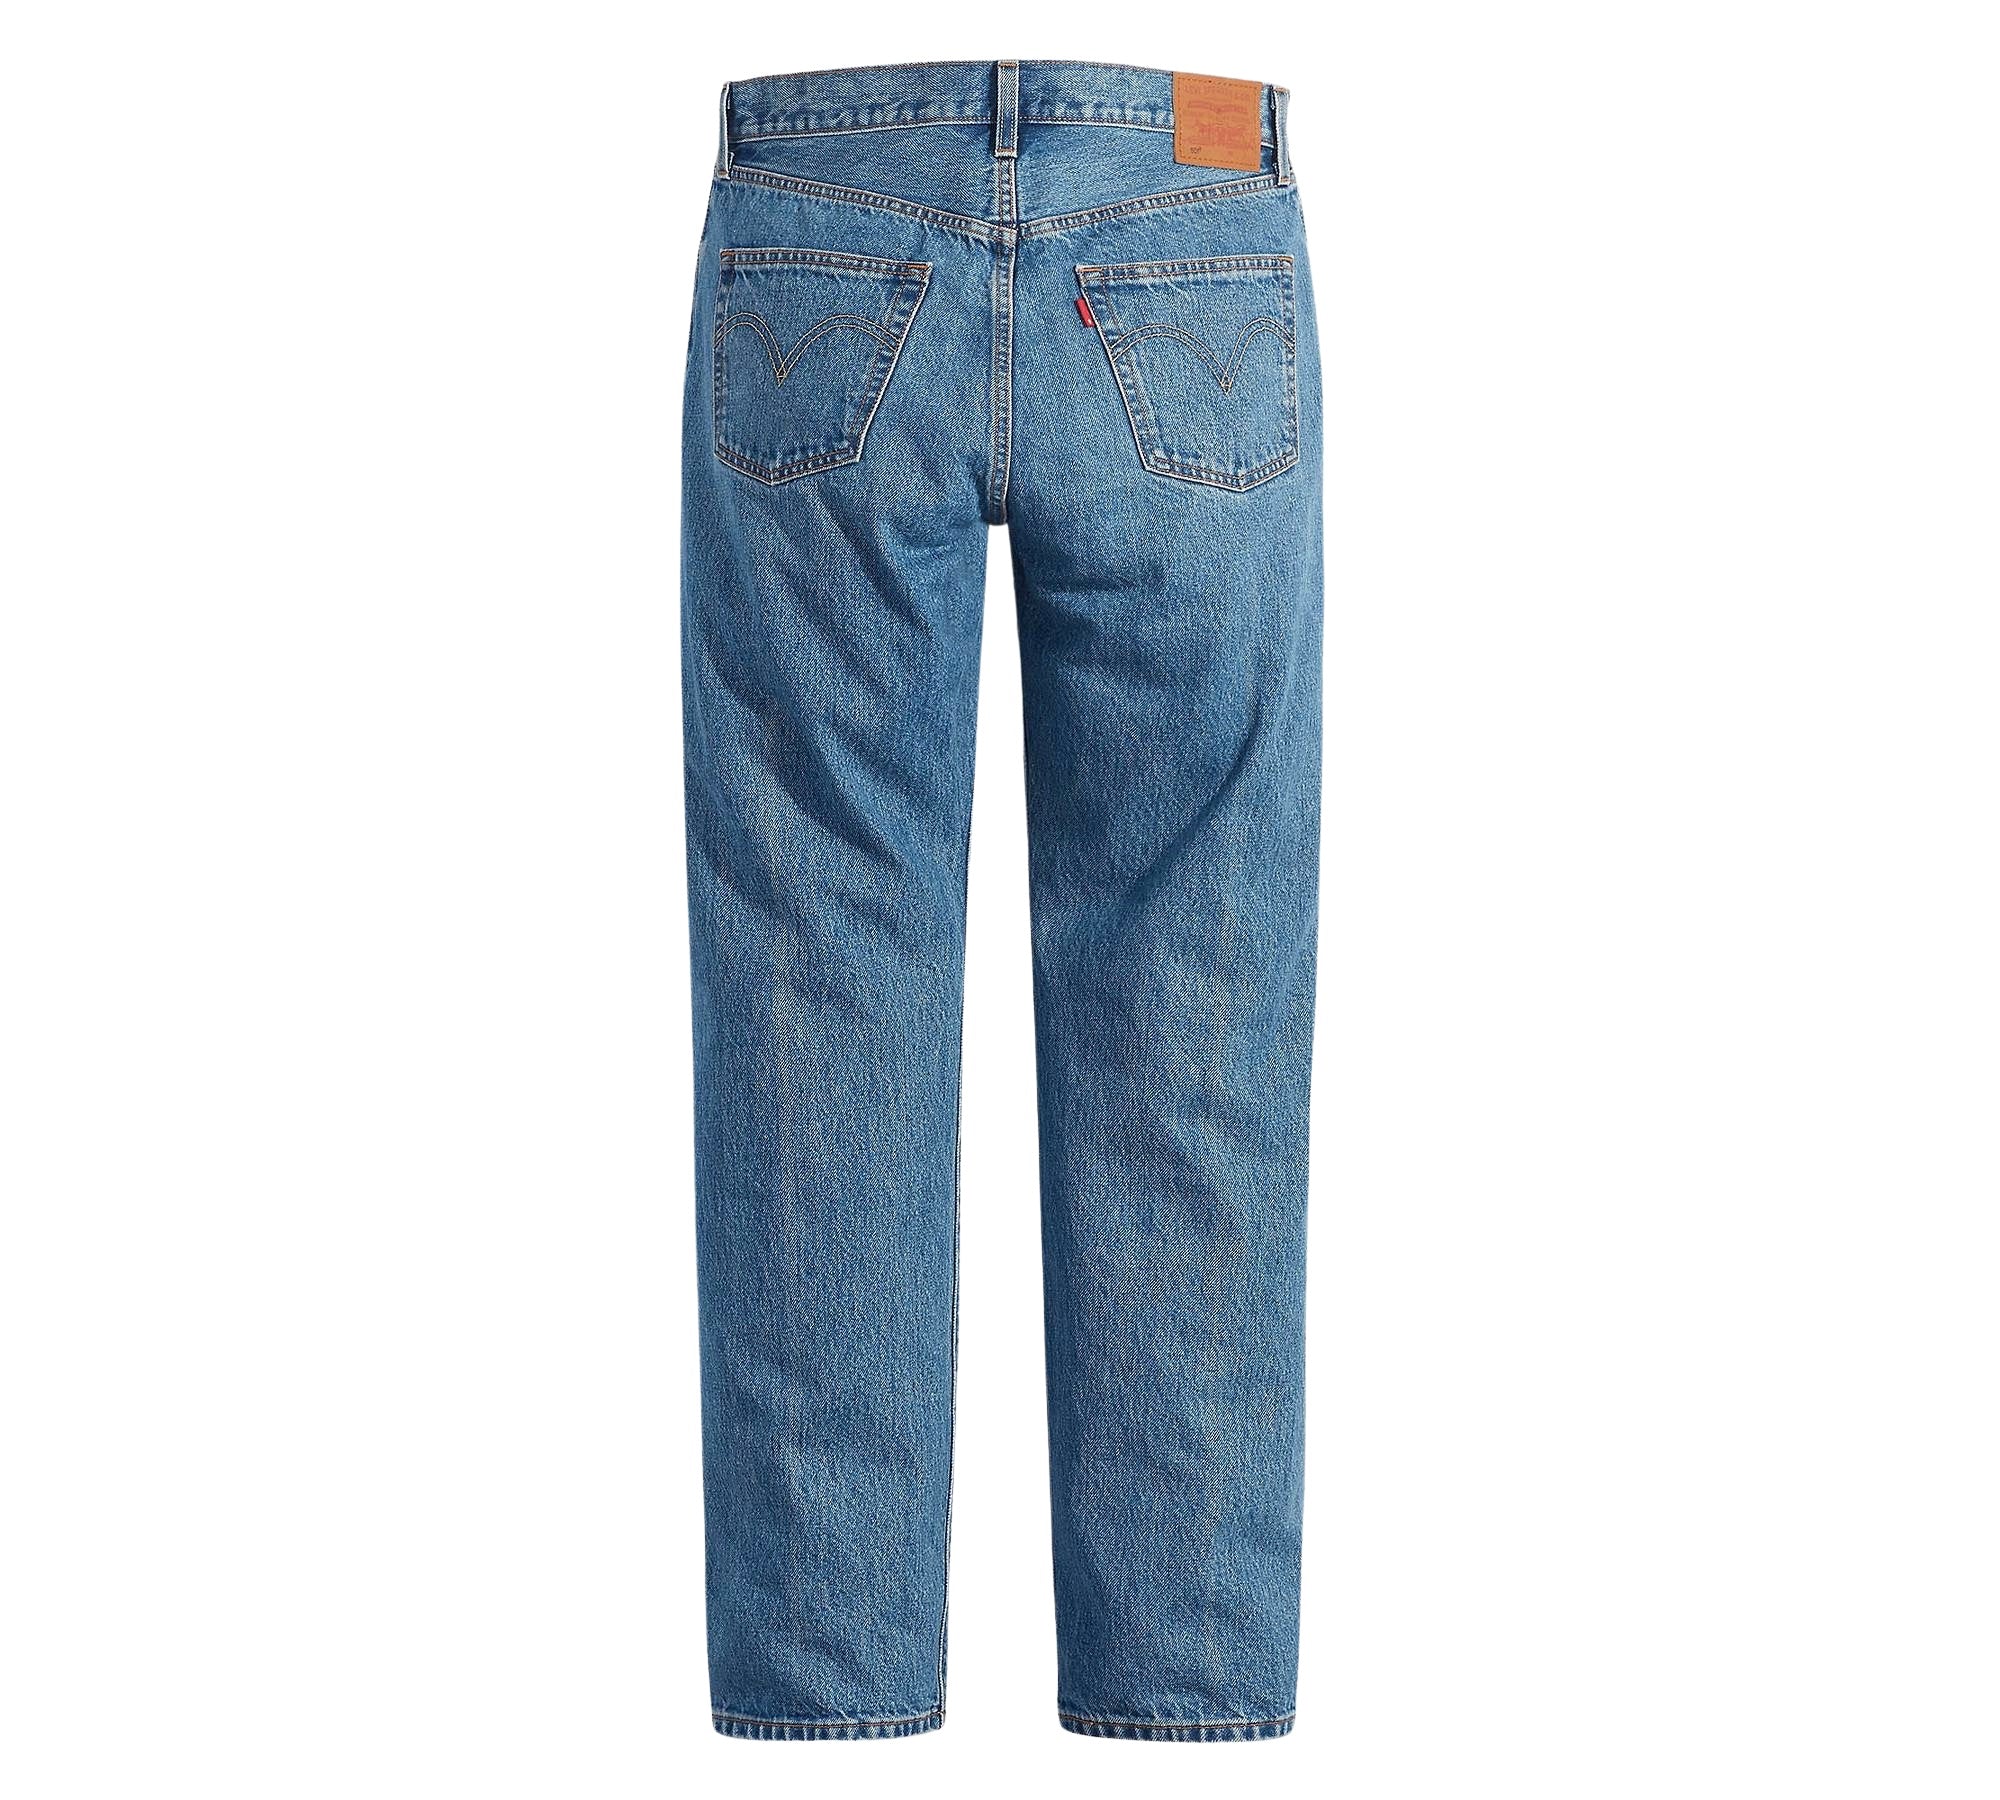 4 Pack - Vintage LEVI'S Classic Blue Zip Fly Jeans - Waist 29 - Length 32 - Vintage Superstore Online